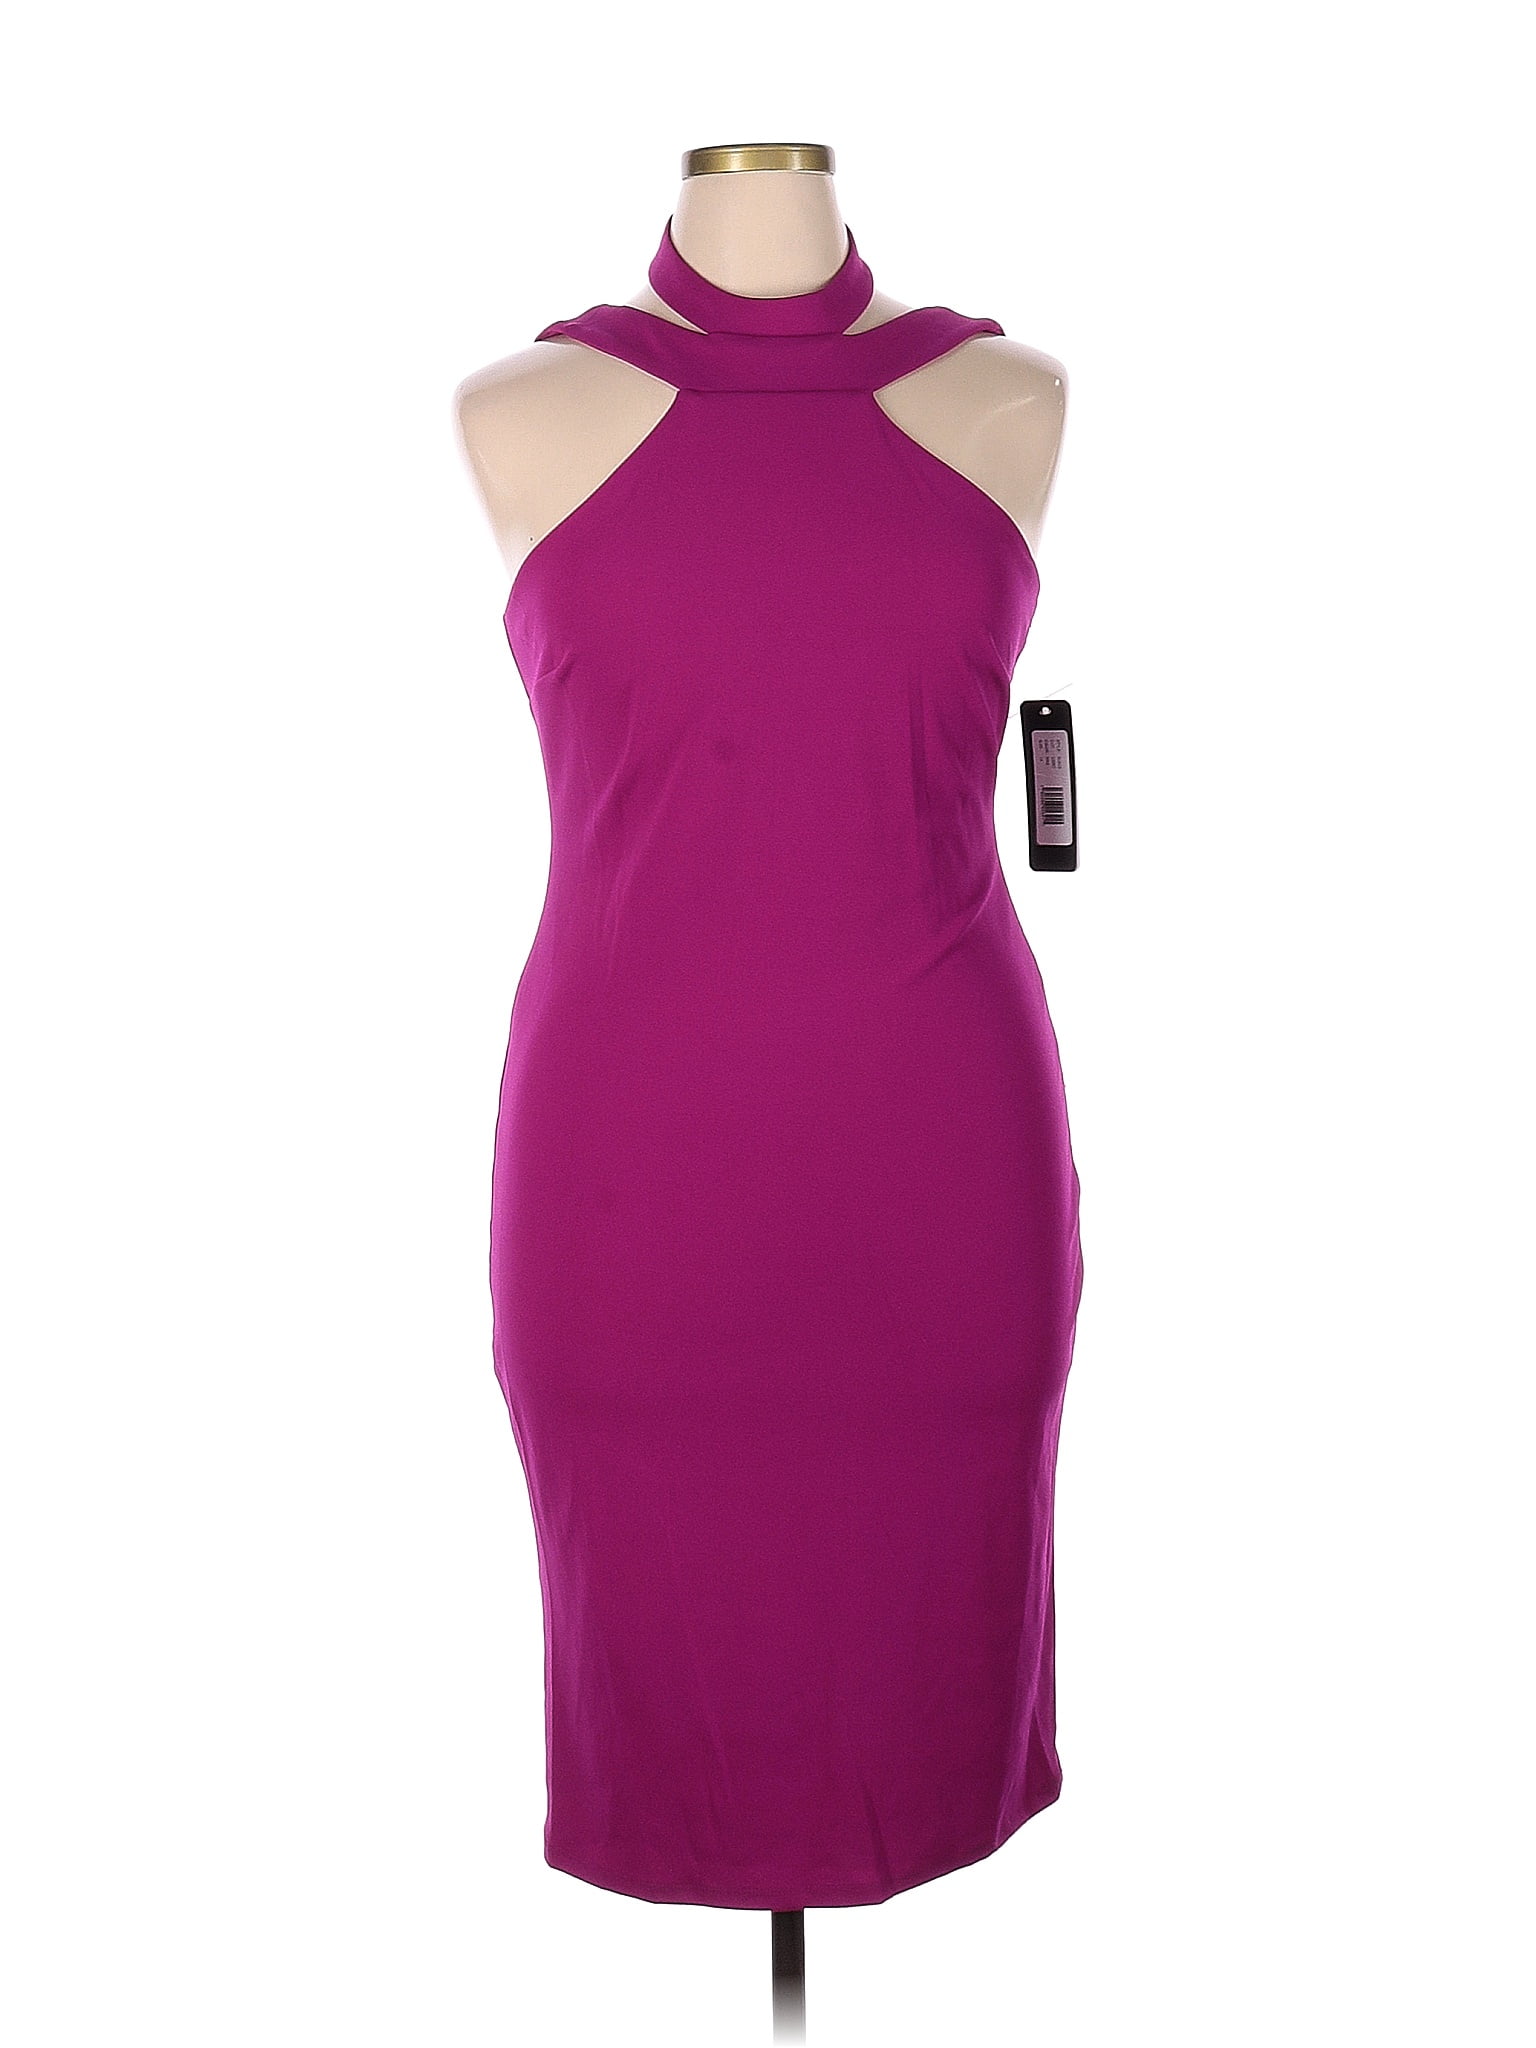 Bebe Purple Cocktail Dress Size 14 - 70% off | thredUP